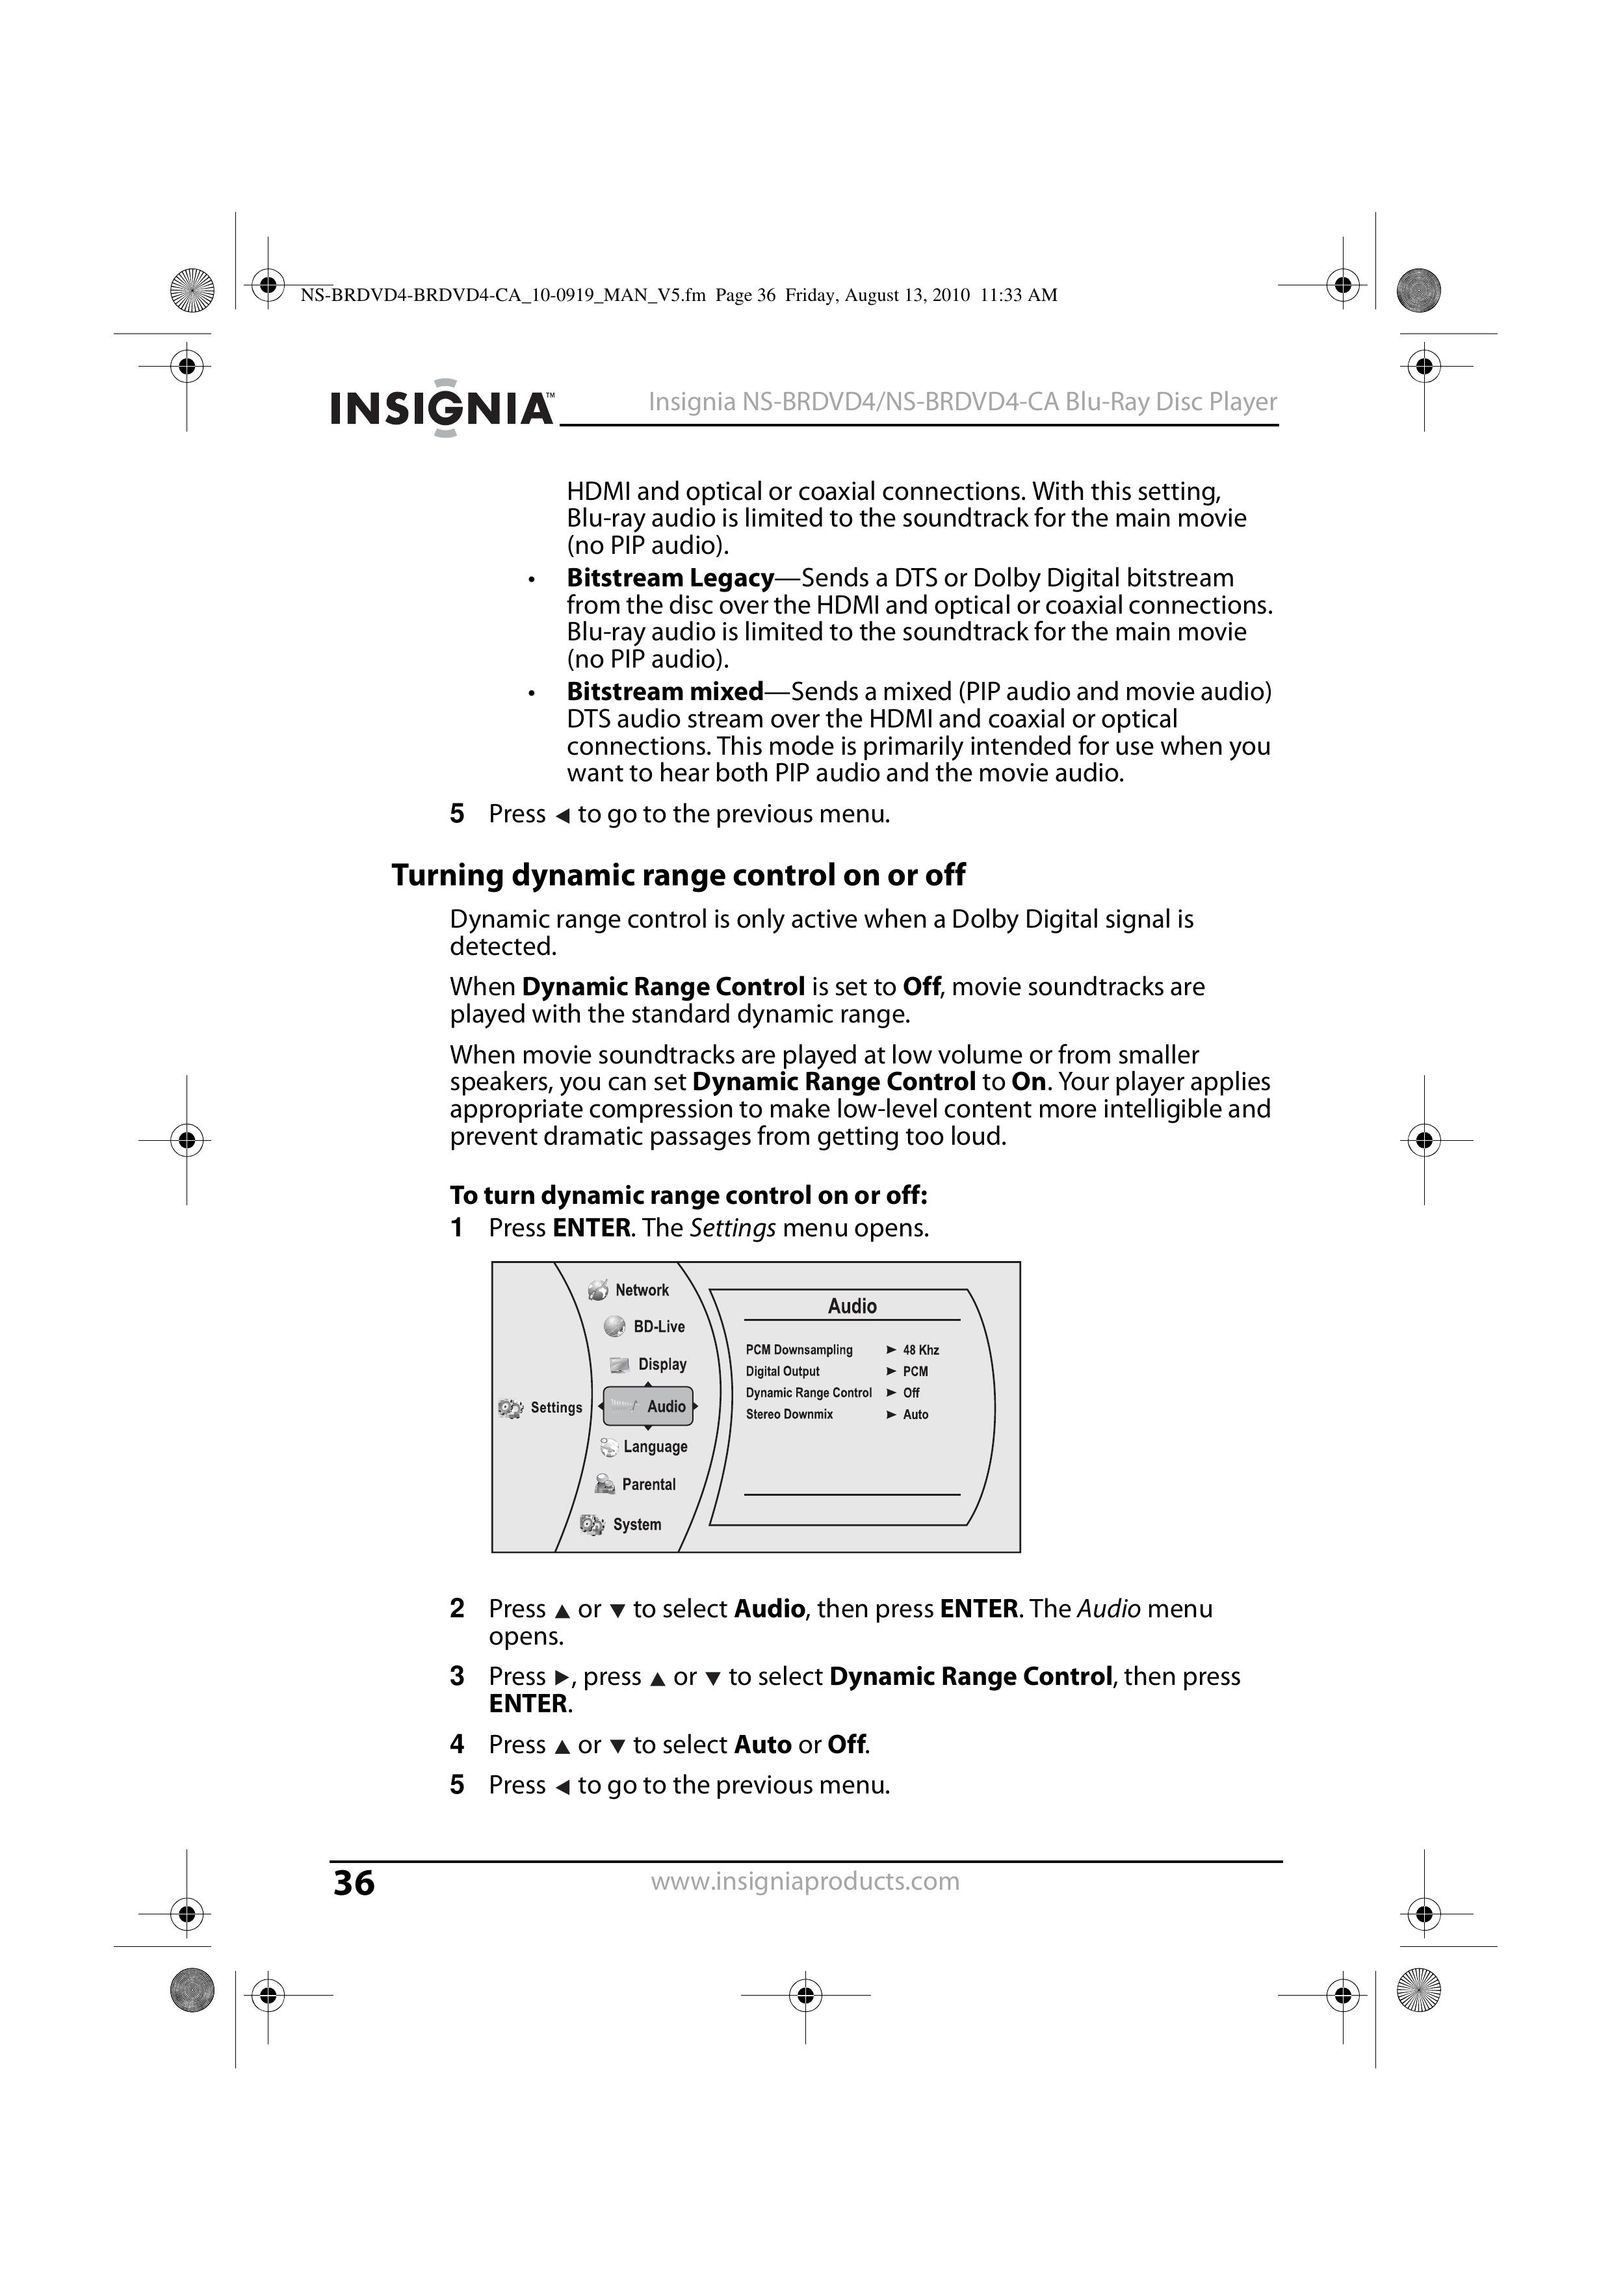 Insignia NS-BRDVD4 Blu-ray Player User Manual (Page 36)